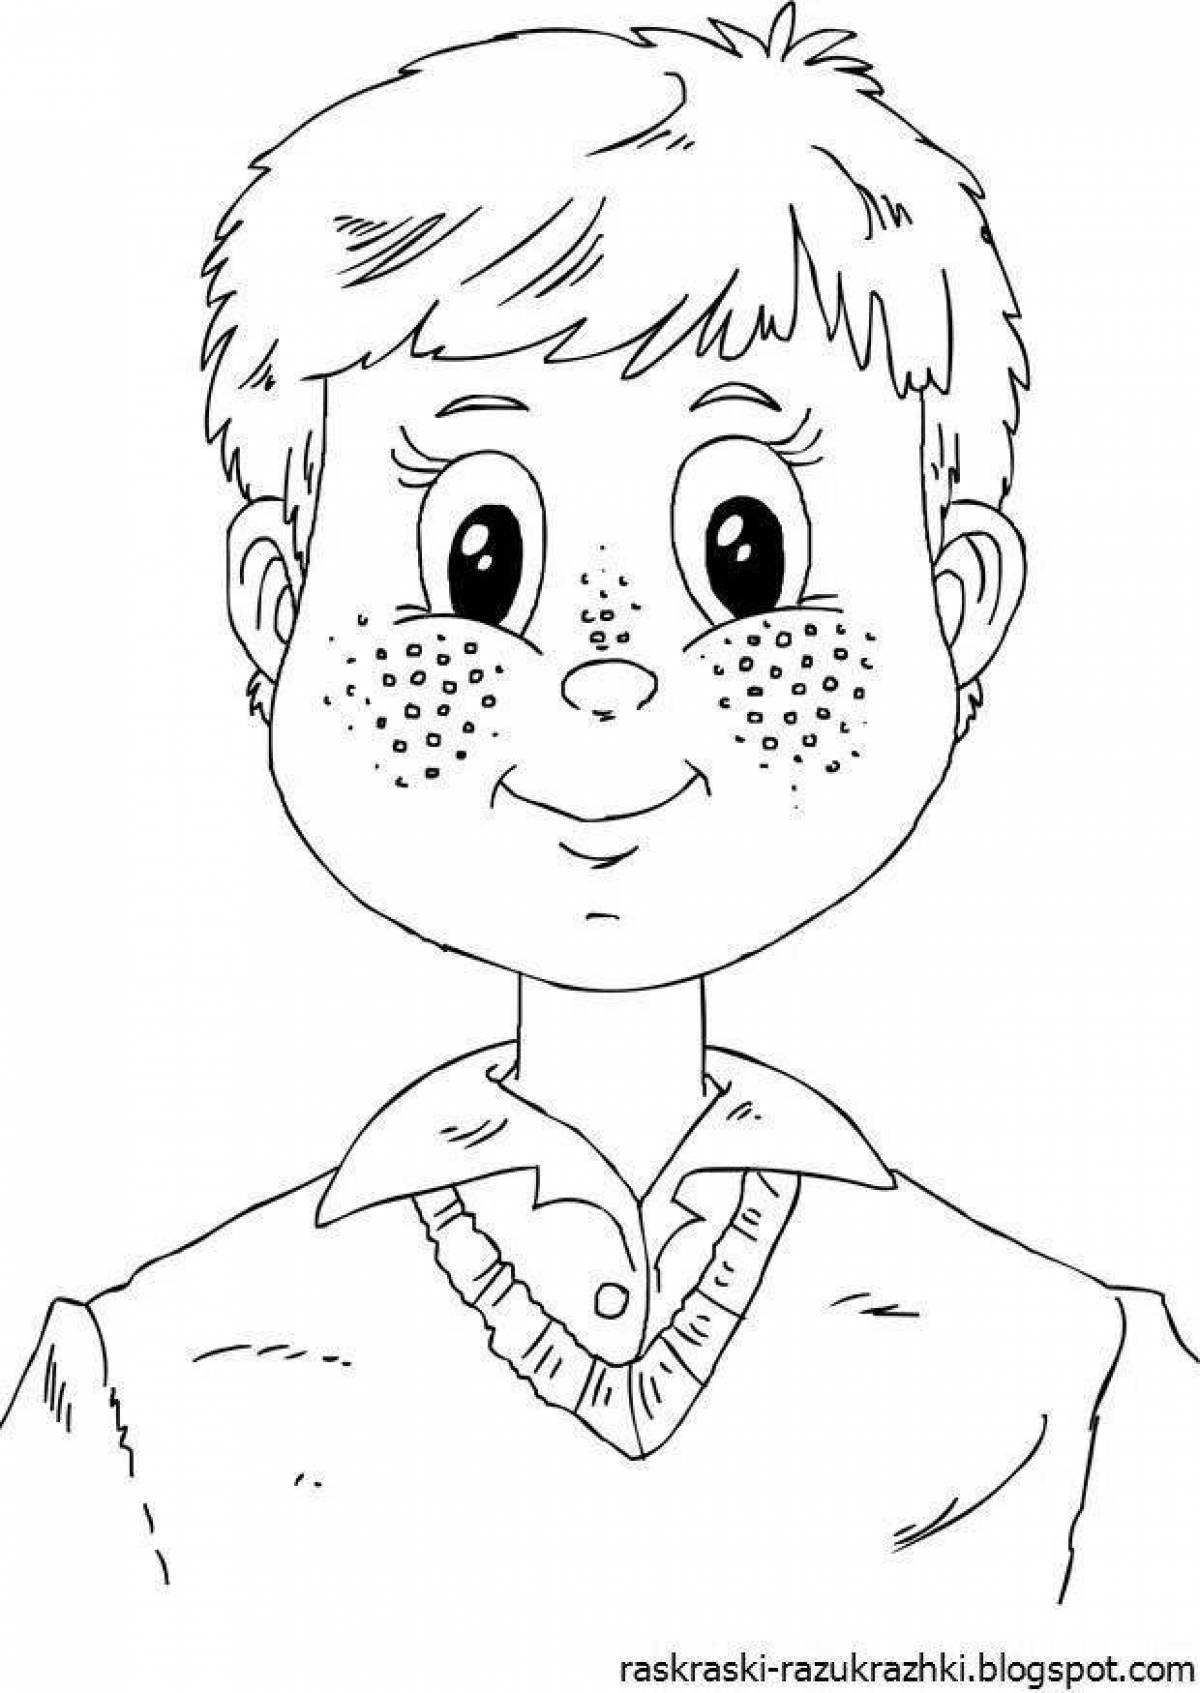 Fun coloring of the boy's face